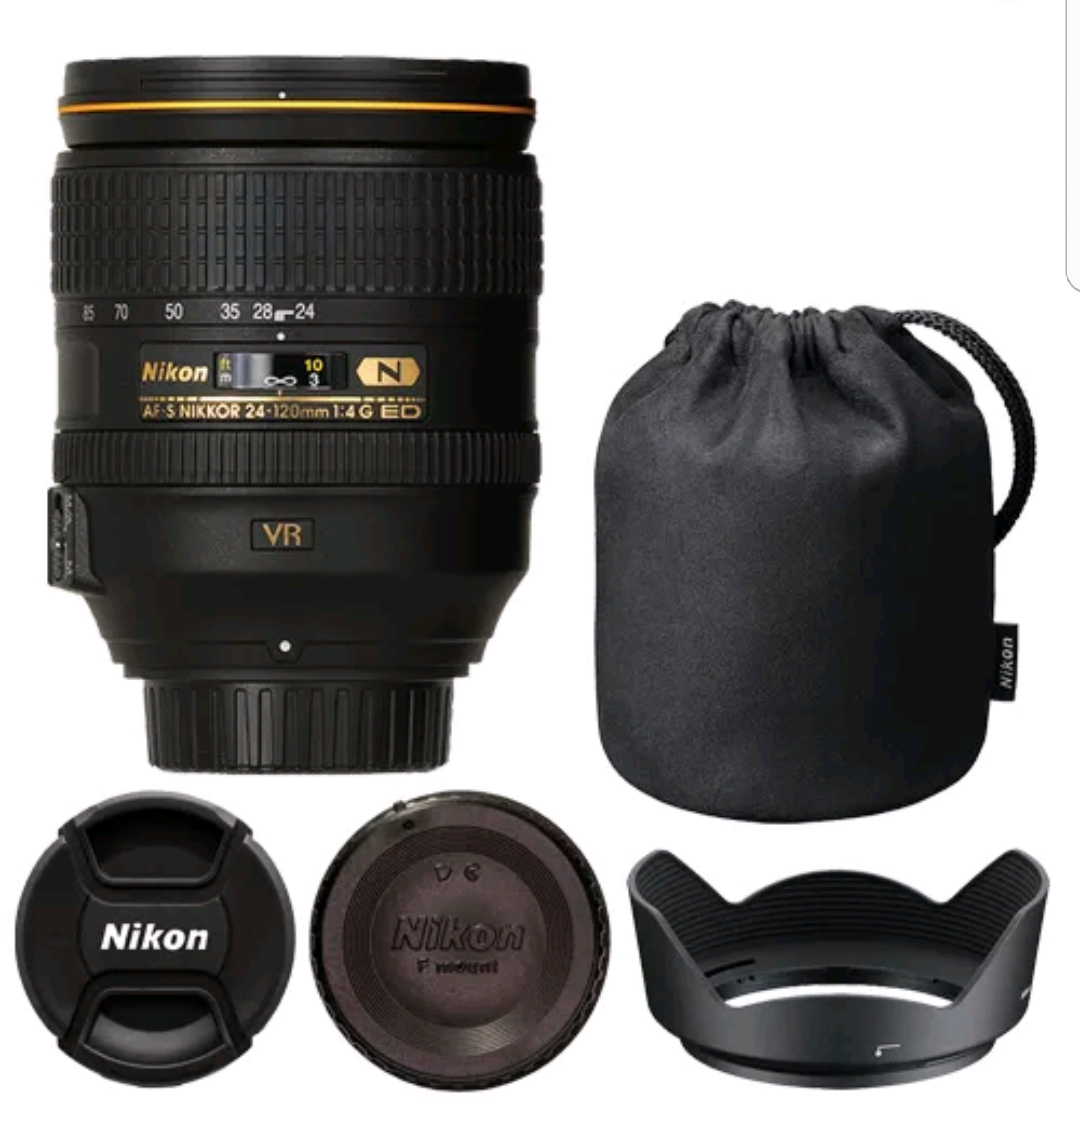 Nikon 24 120mm ed vr. Nikon 24-120mm f/4g. Объектив Nikon 24-120mm f/4g ed VR af-s Nikkor. Nikon 24-120mm f/4.